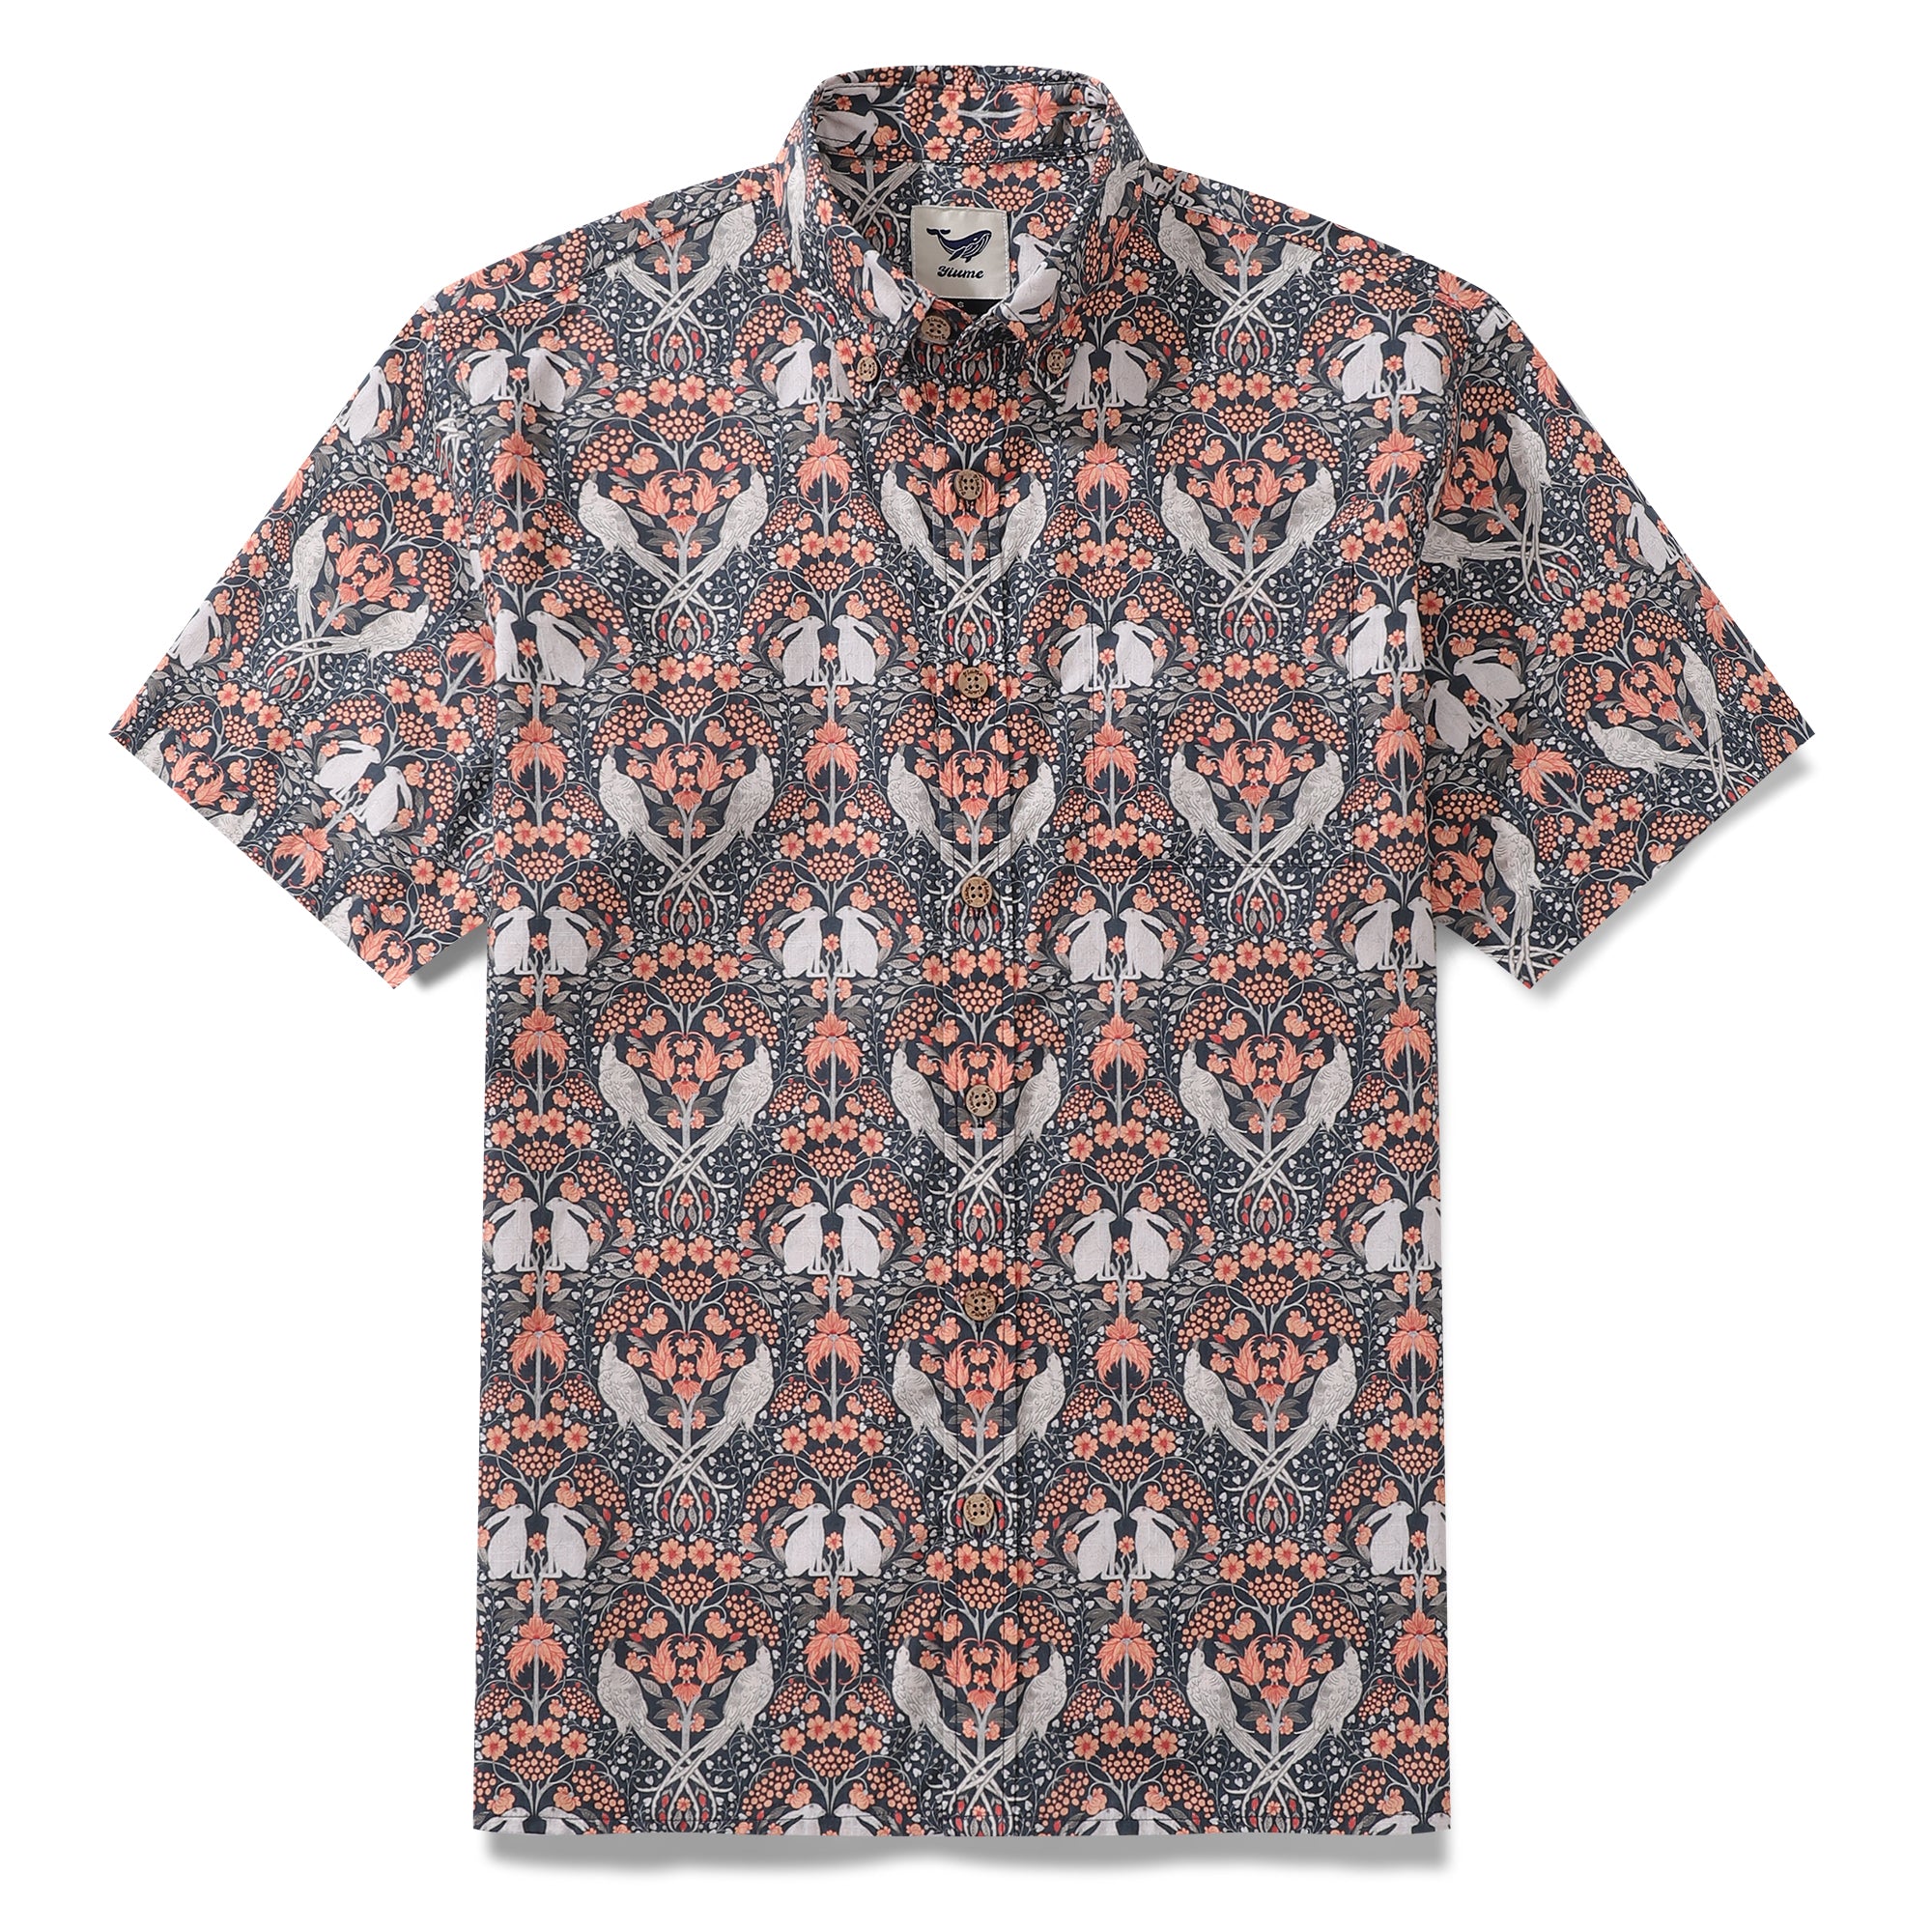 Men's Hawaiian Shirt Enchanted Woodland By Pallavi Chaudhary Cotton Button-down Short Sleeve Aloha Shirt